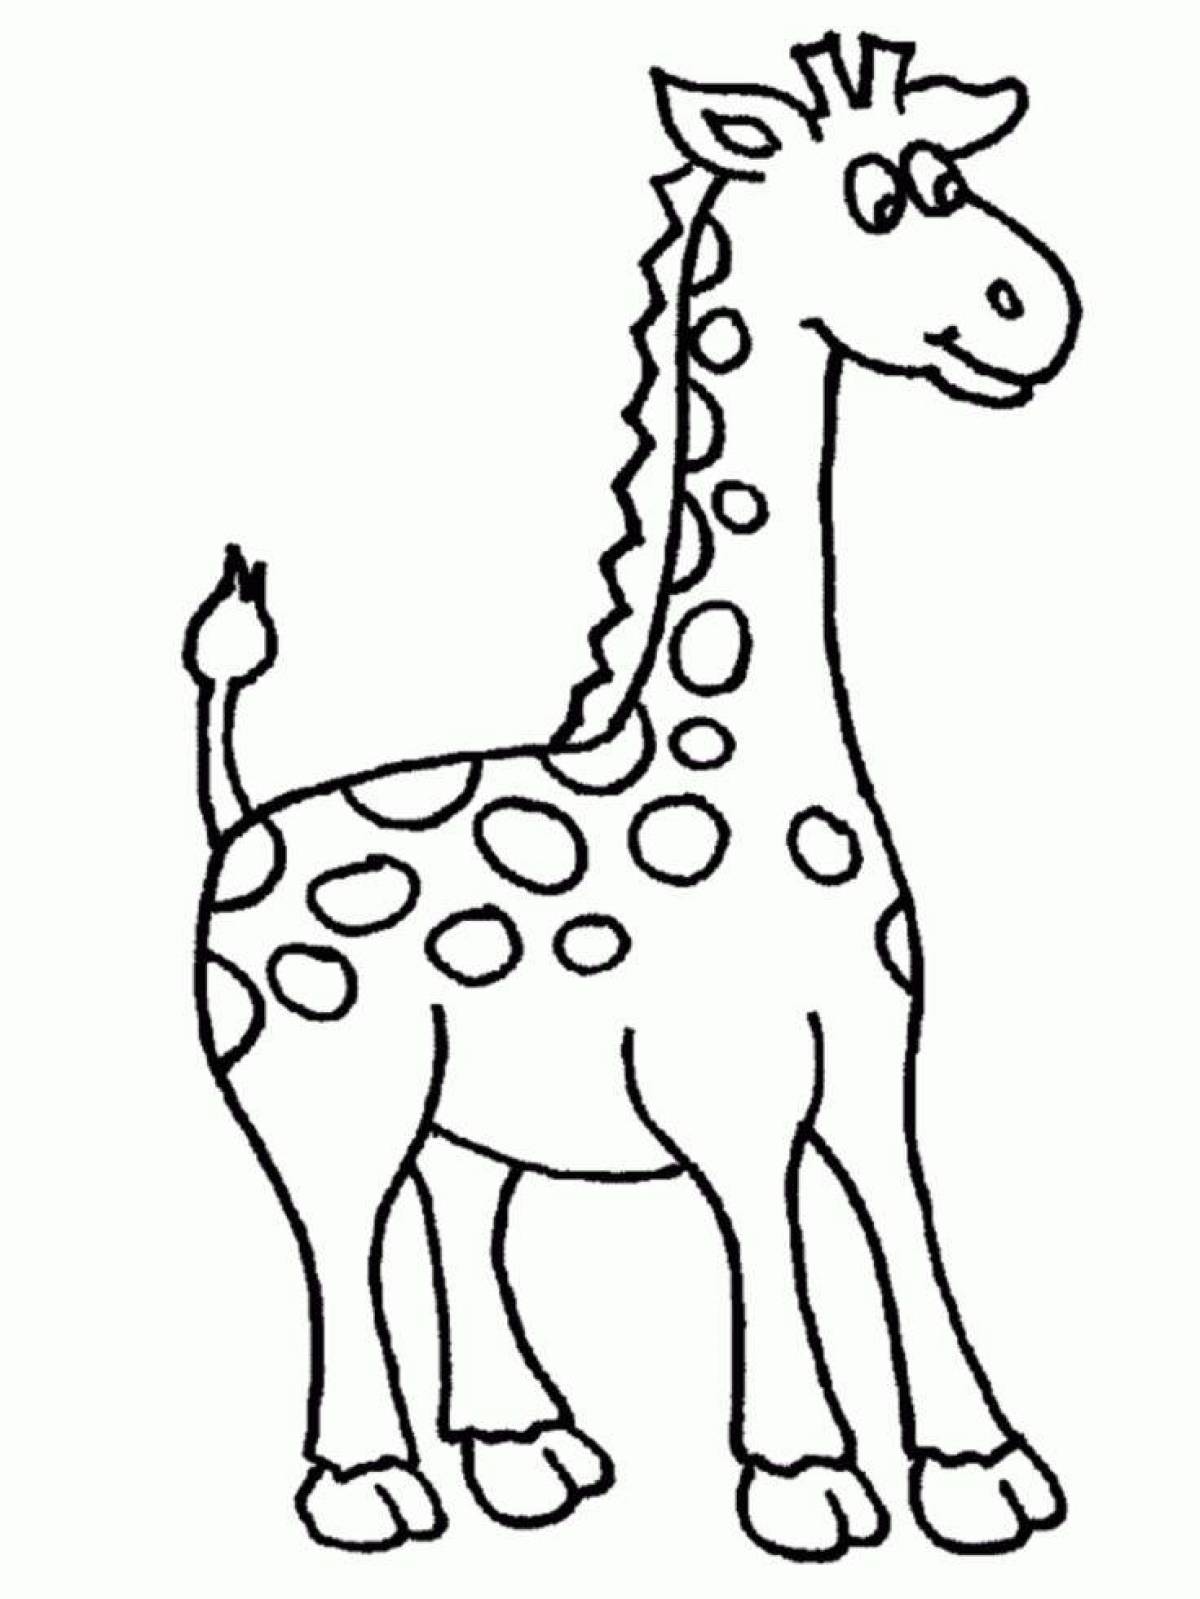 Blissful giraffe coloring book for kids